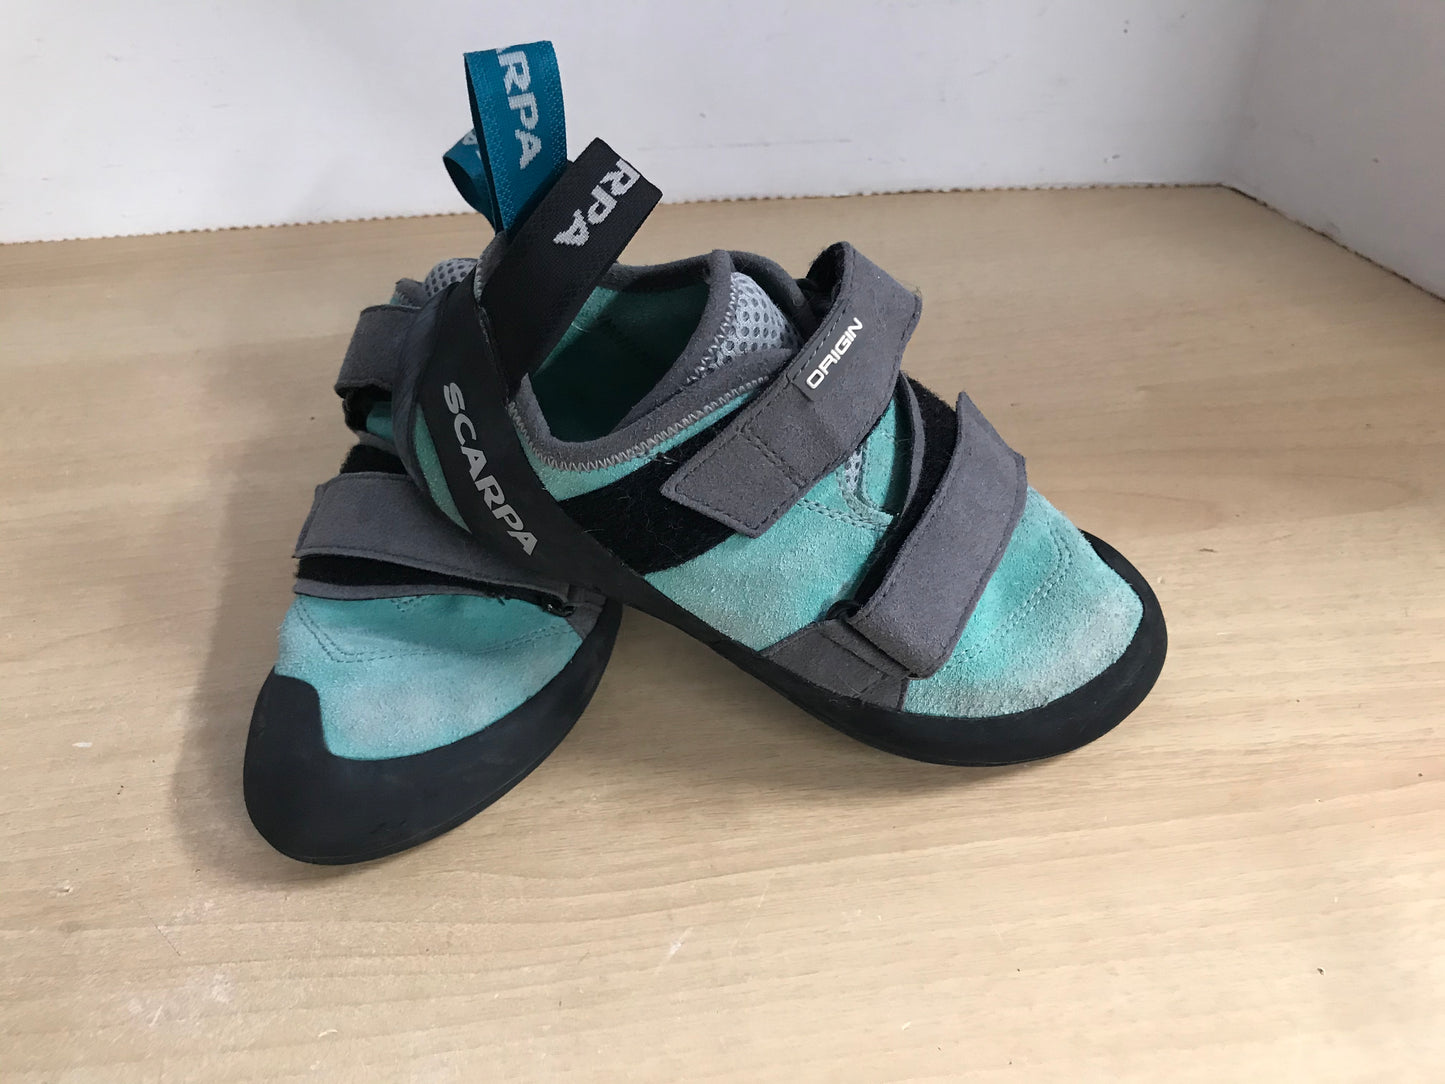 Rock Climbing Shoes Child Size 4.5 Scarpa Origin Grey Teal Retail 125.00 Fantastic Quality  JP 5596